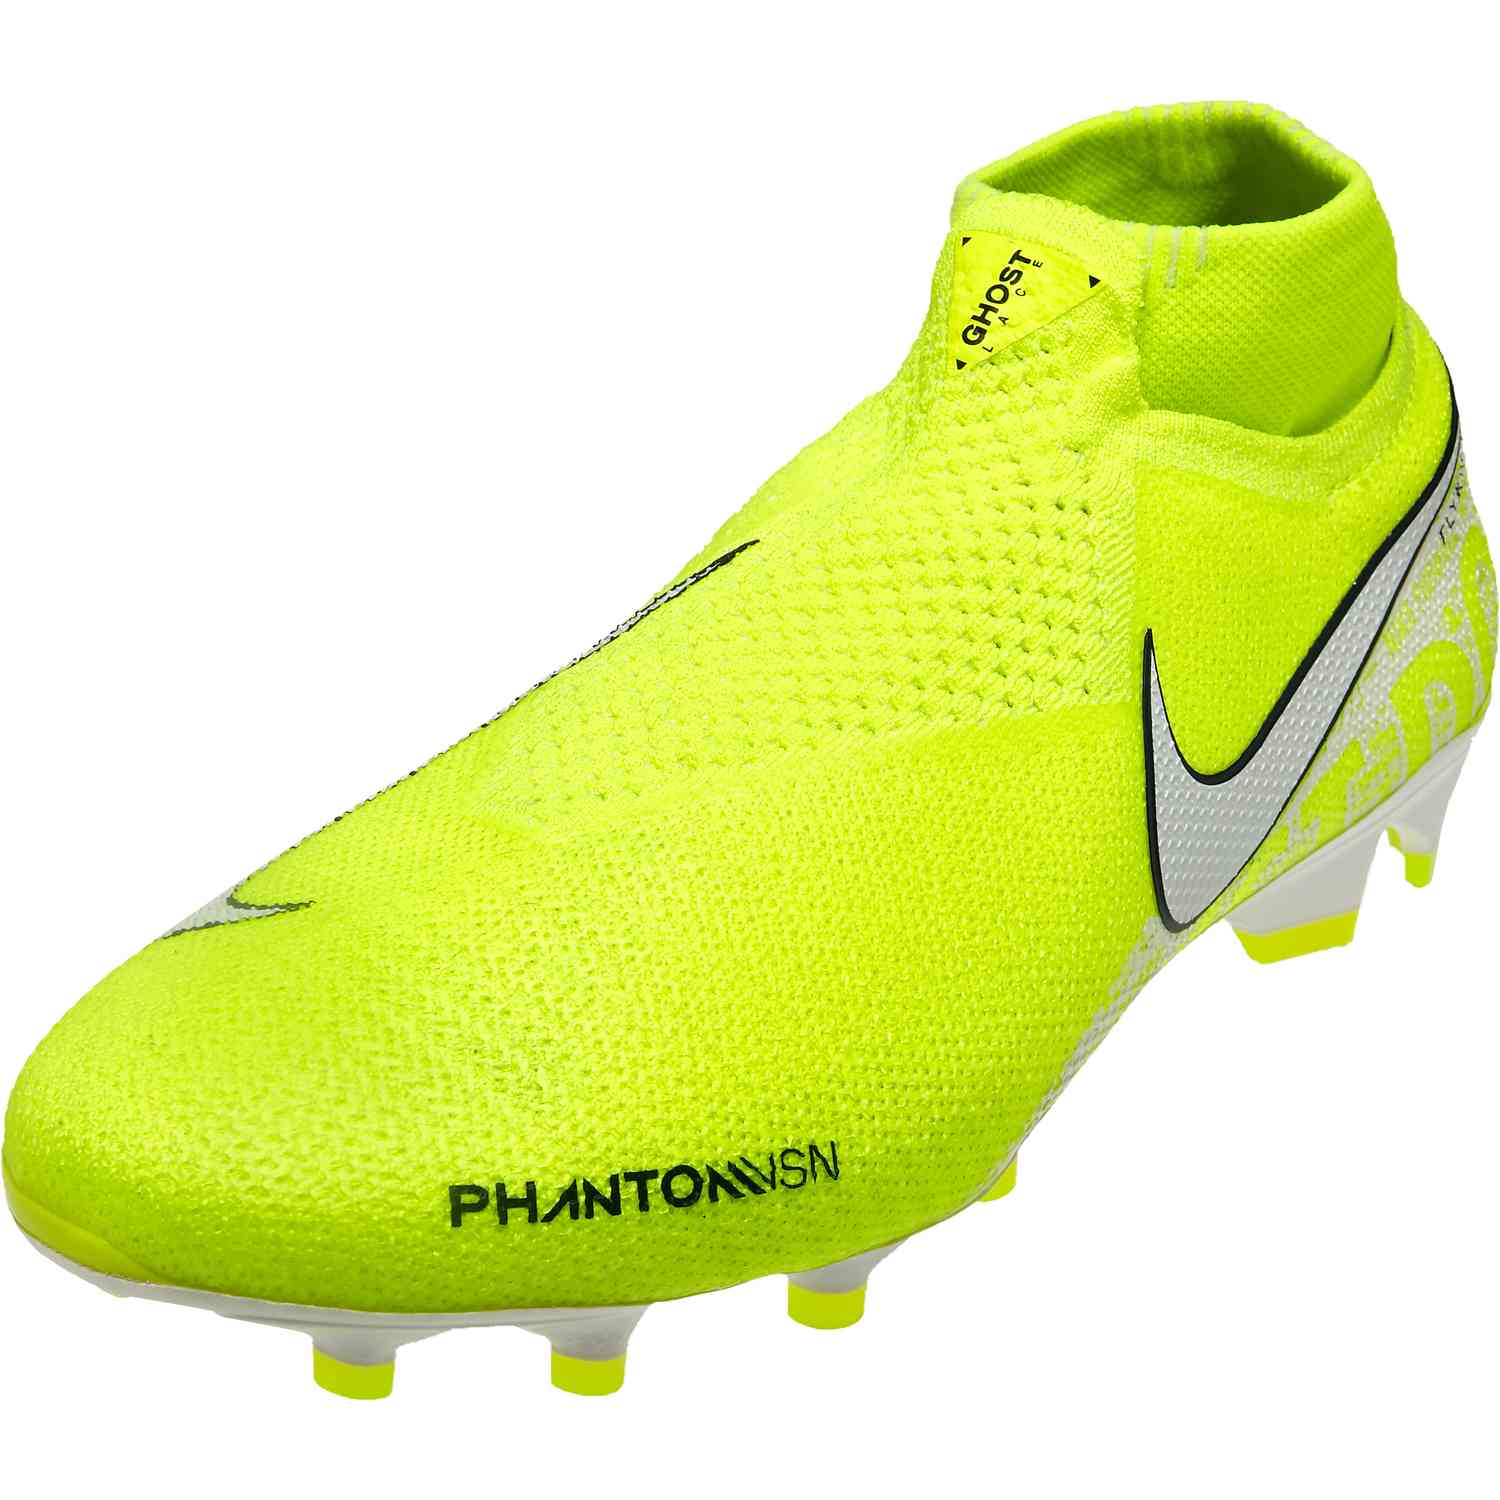 Nike Phantom Vision Elite FG - New 